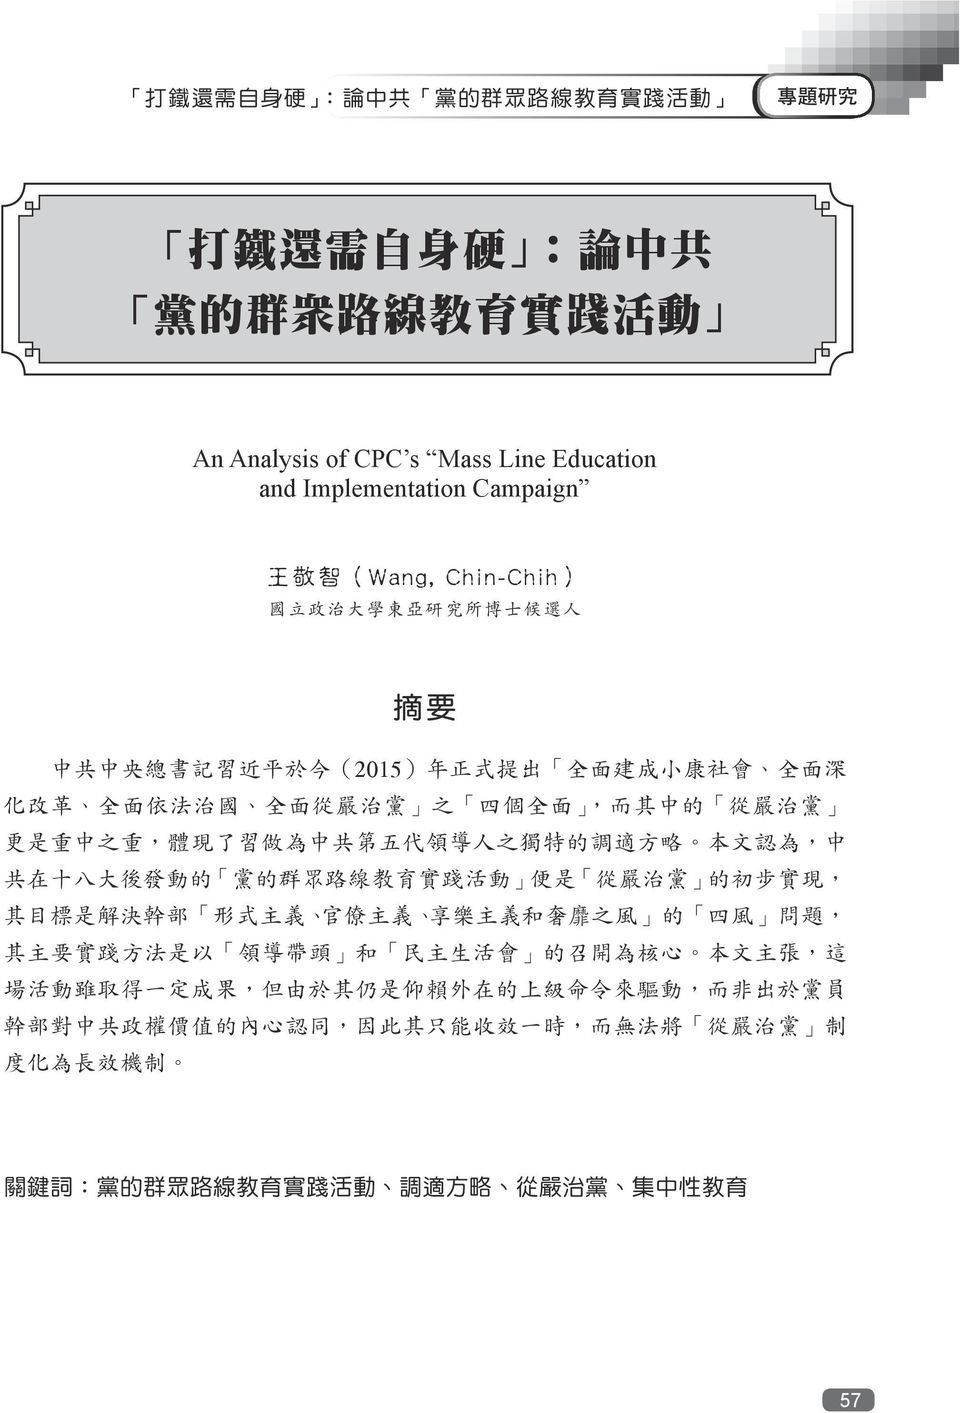 Implementation Campaign 王 敬 智 (Wang, Chin-Chih) 國 立 政 治 大 學 東 亞 研 究 所 博 士